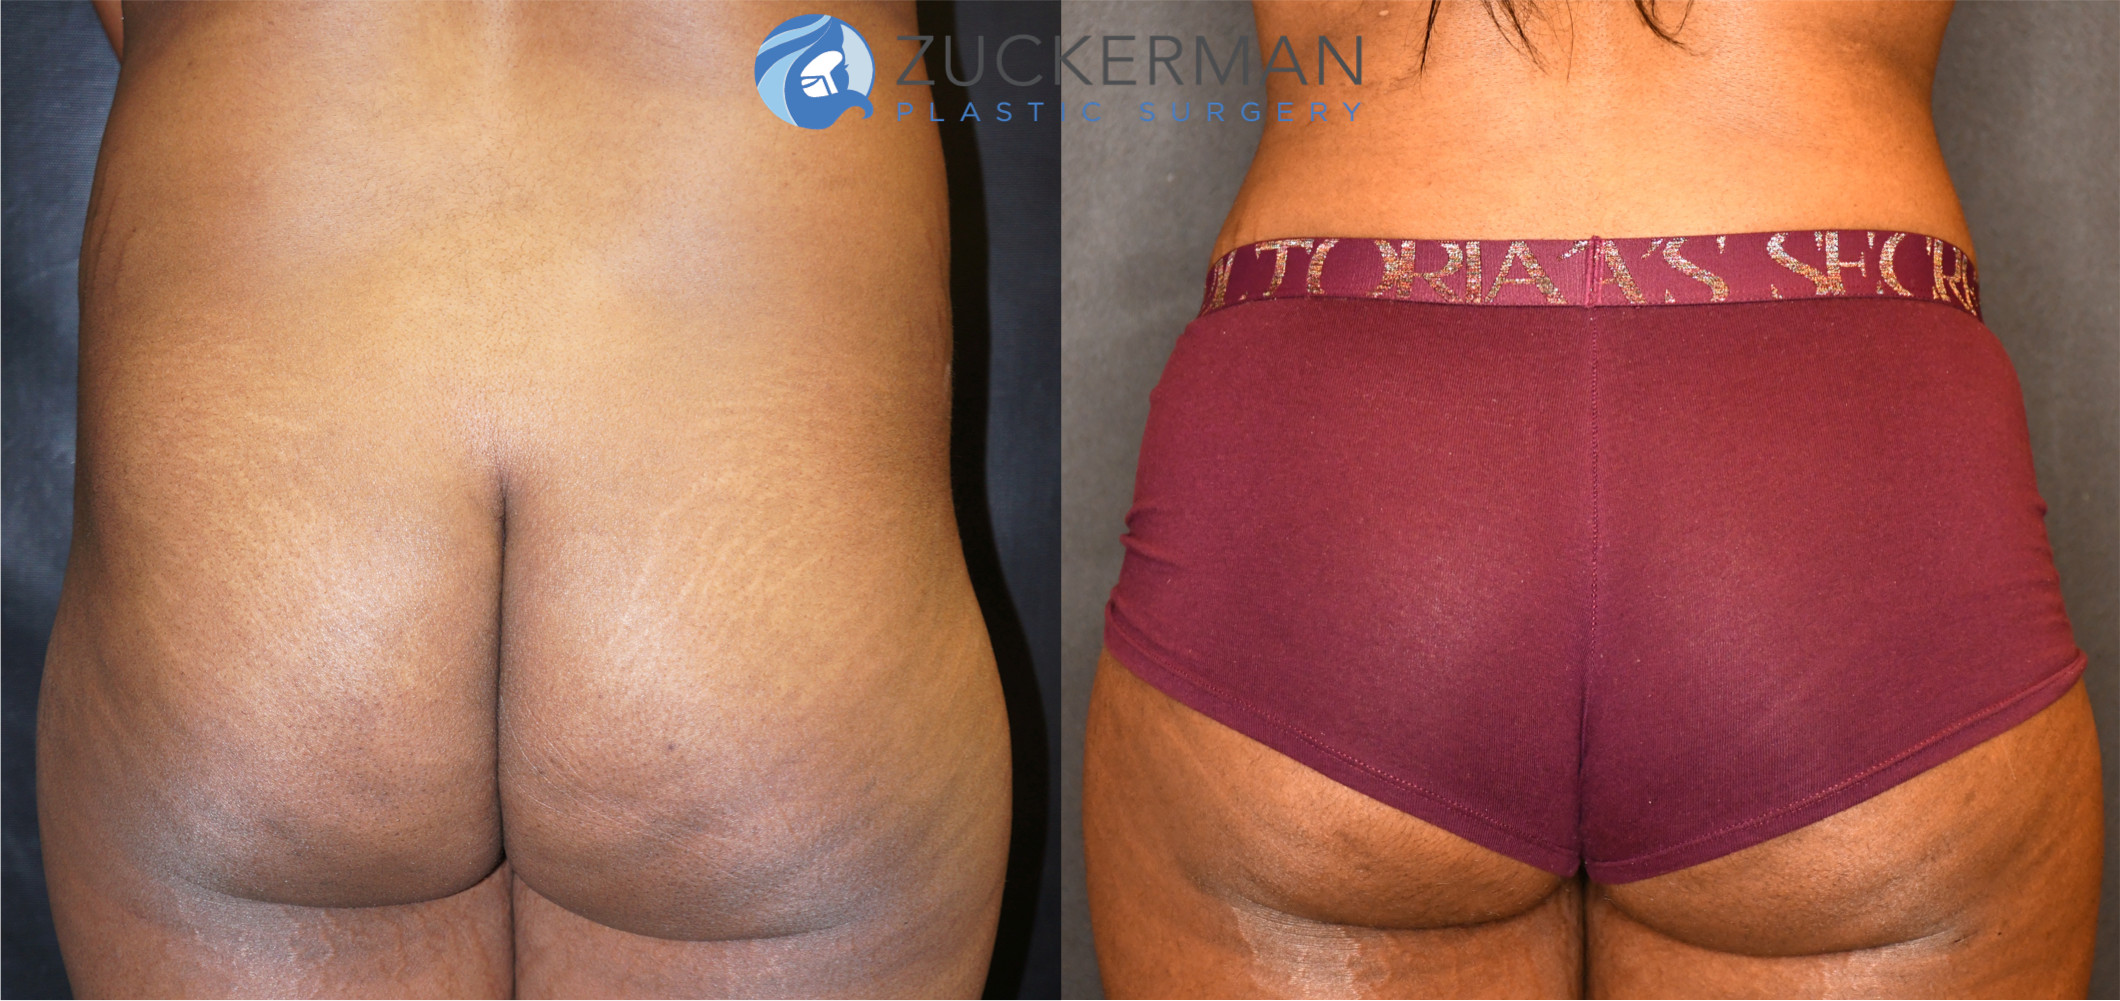 brazilian butt lift, buttock augmentation, bbl, before and after, joshua zuckerman, 12, posterior view